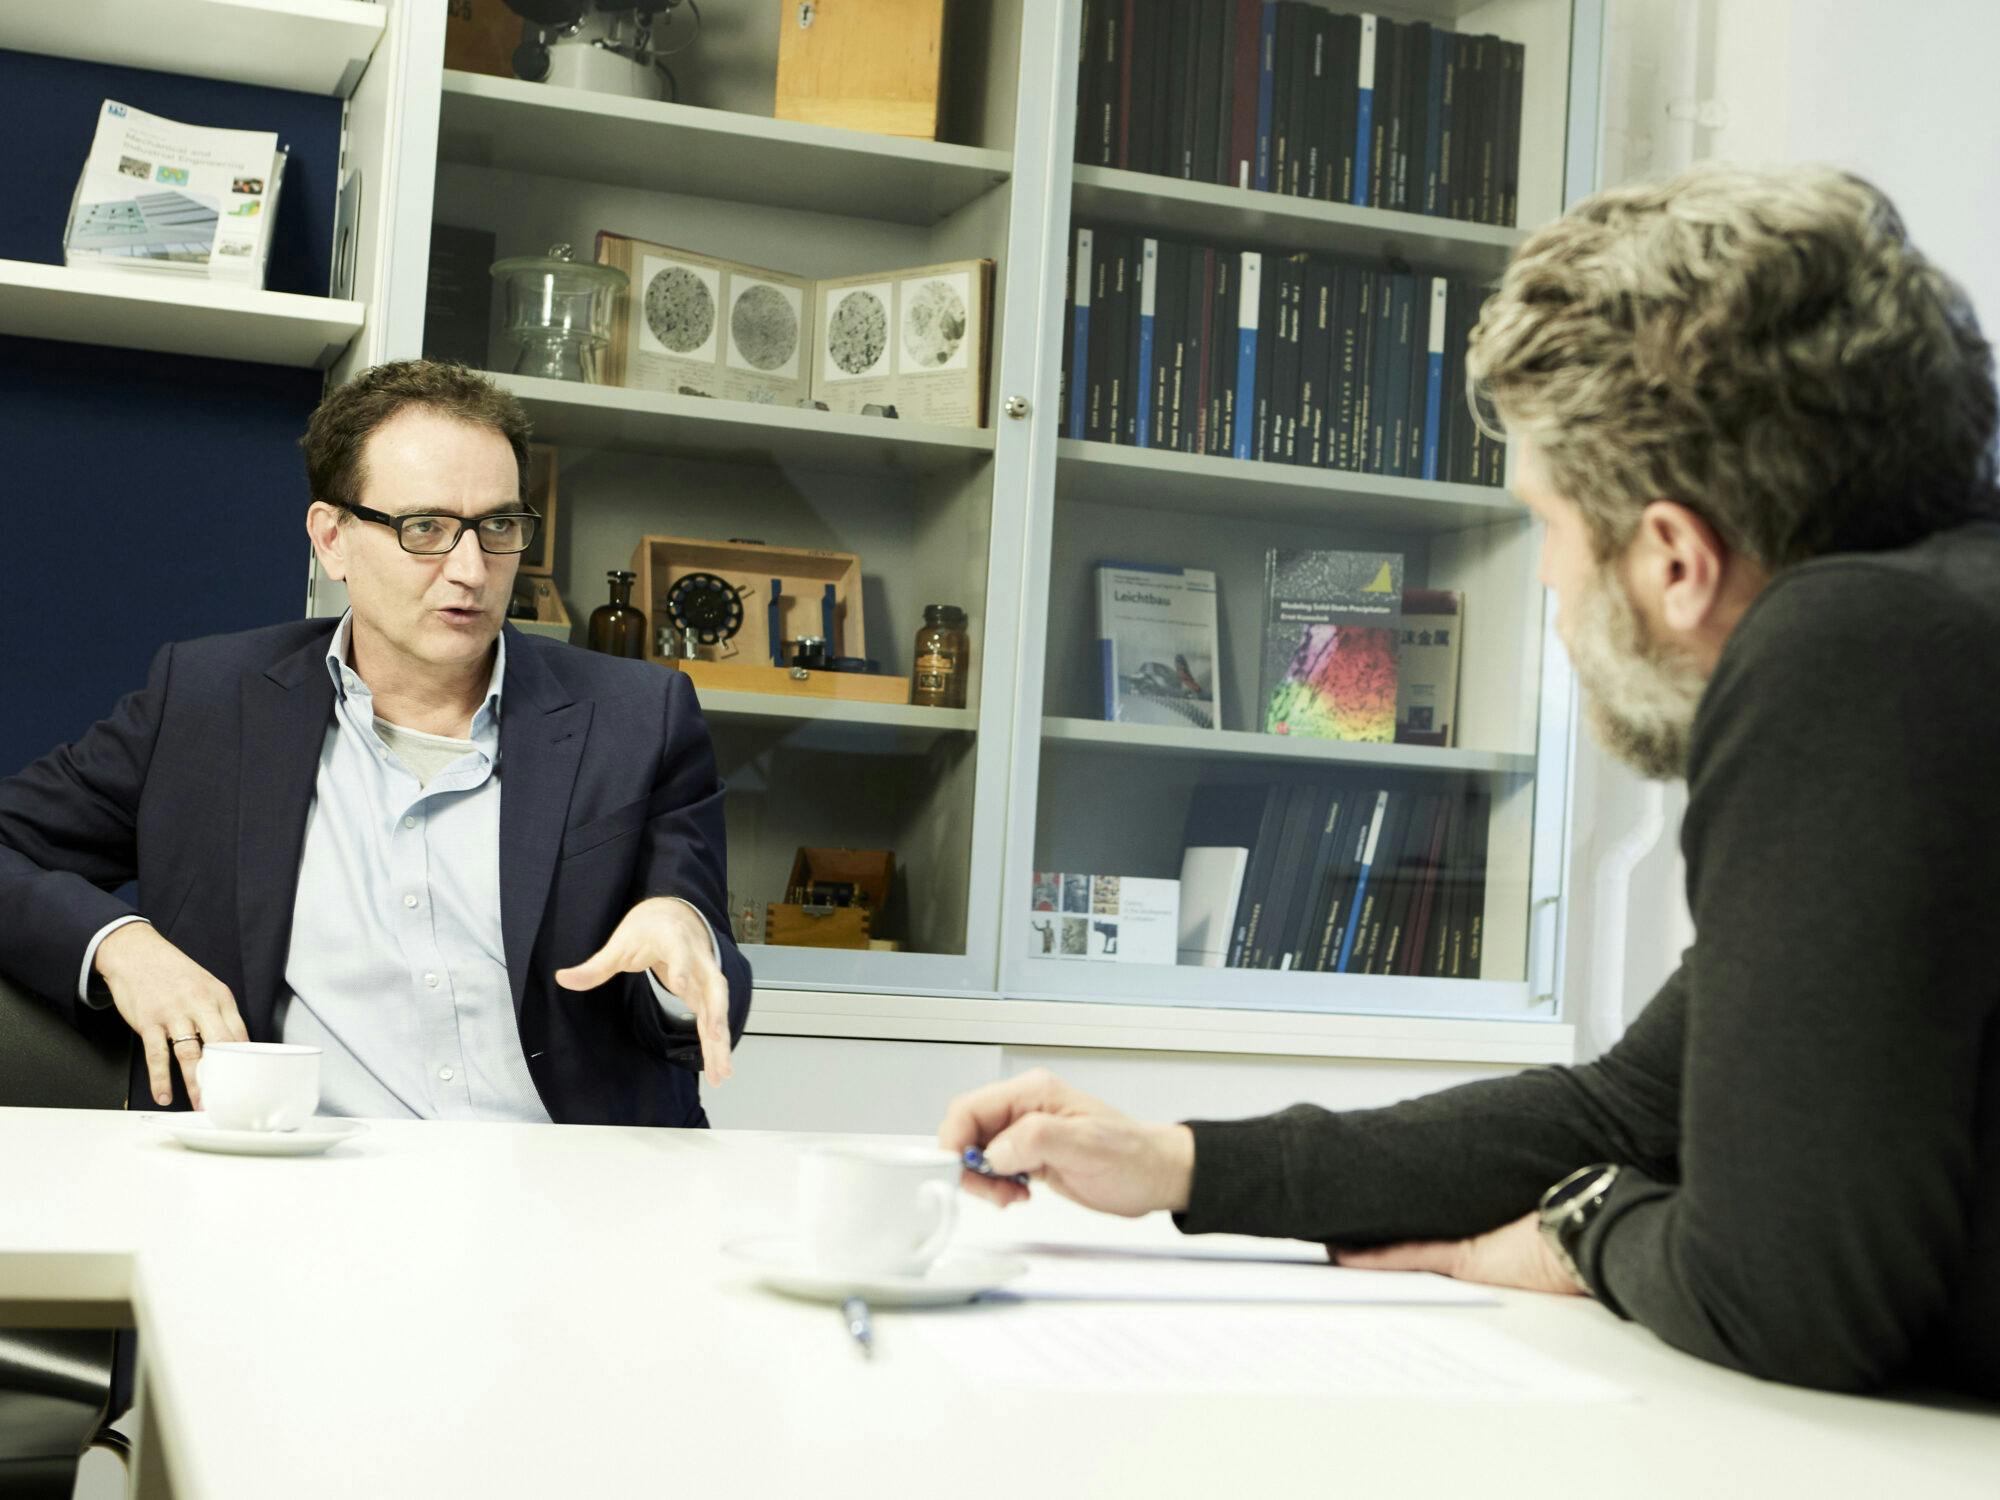 Prof. Jürgen Stampfl and Florian Zangerl at the interview at TU Wien.